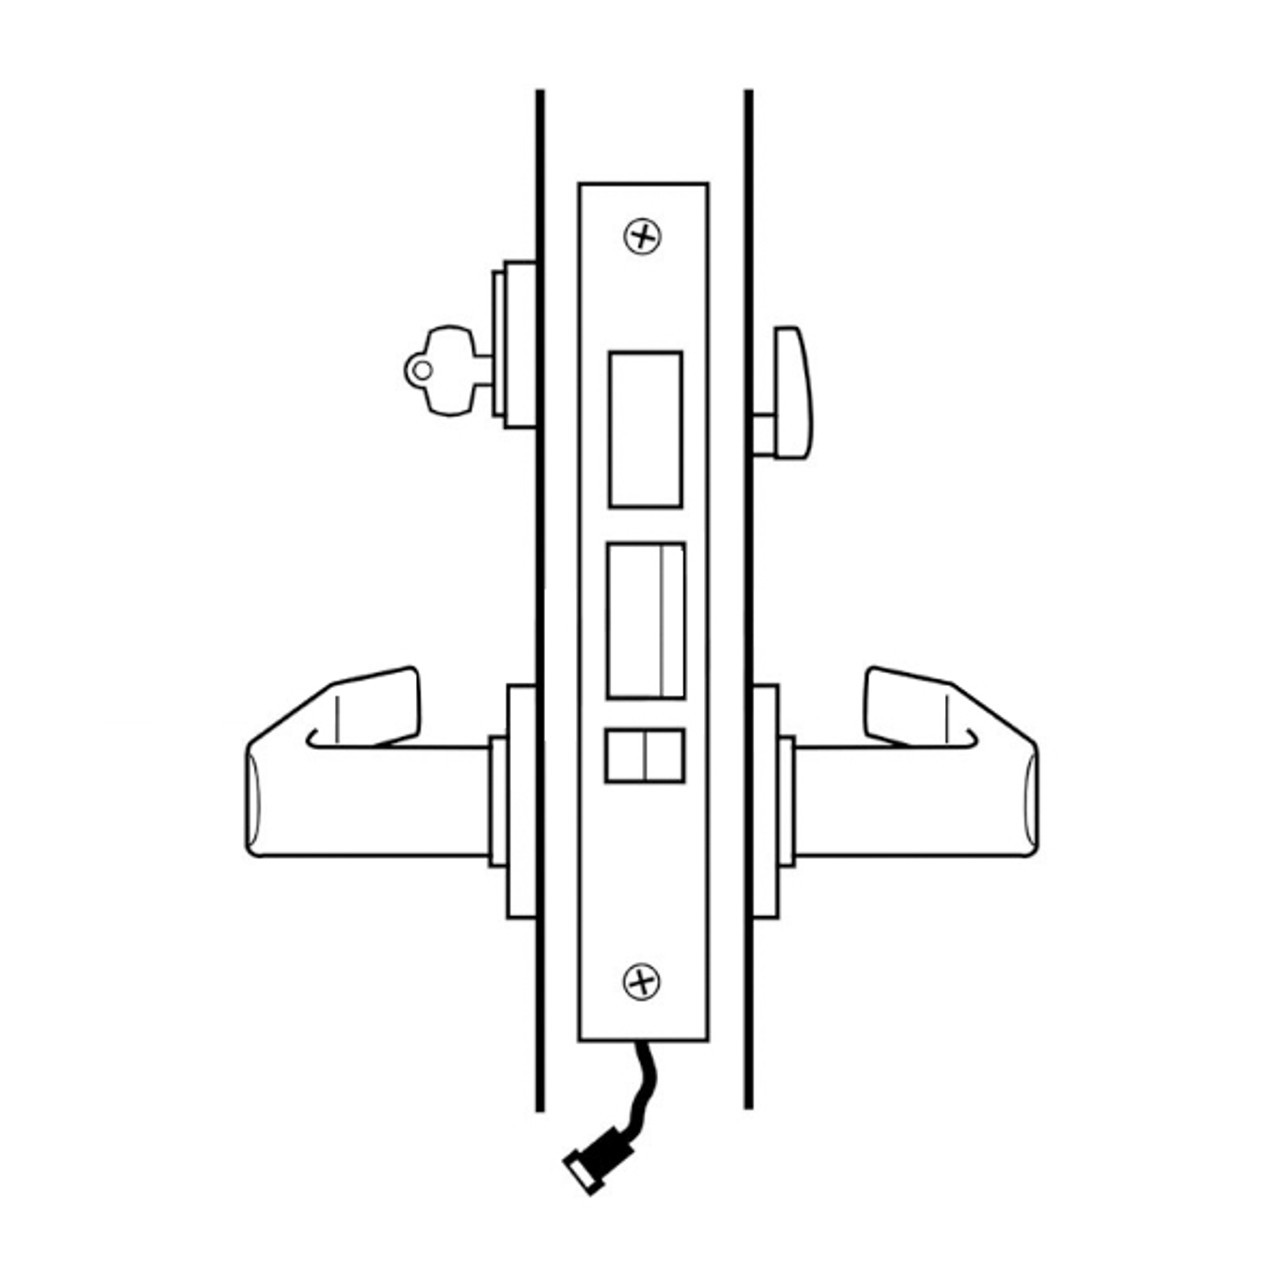 45HW7TWEL15J612 Best 40HW series Double Key Deadbolt Fail Safe Electromechanical Mortise Lever Lock with Contour w/ Angle Return Style in Satin Bronze